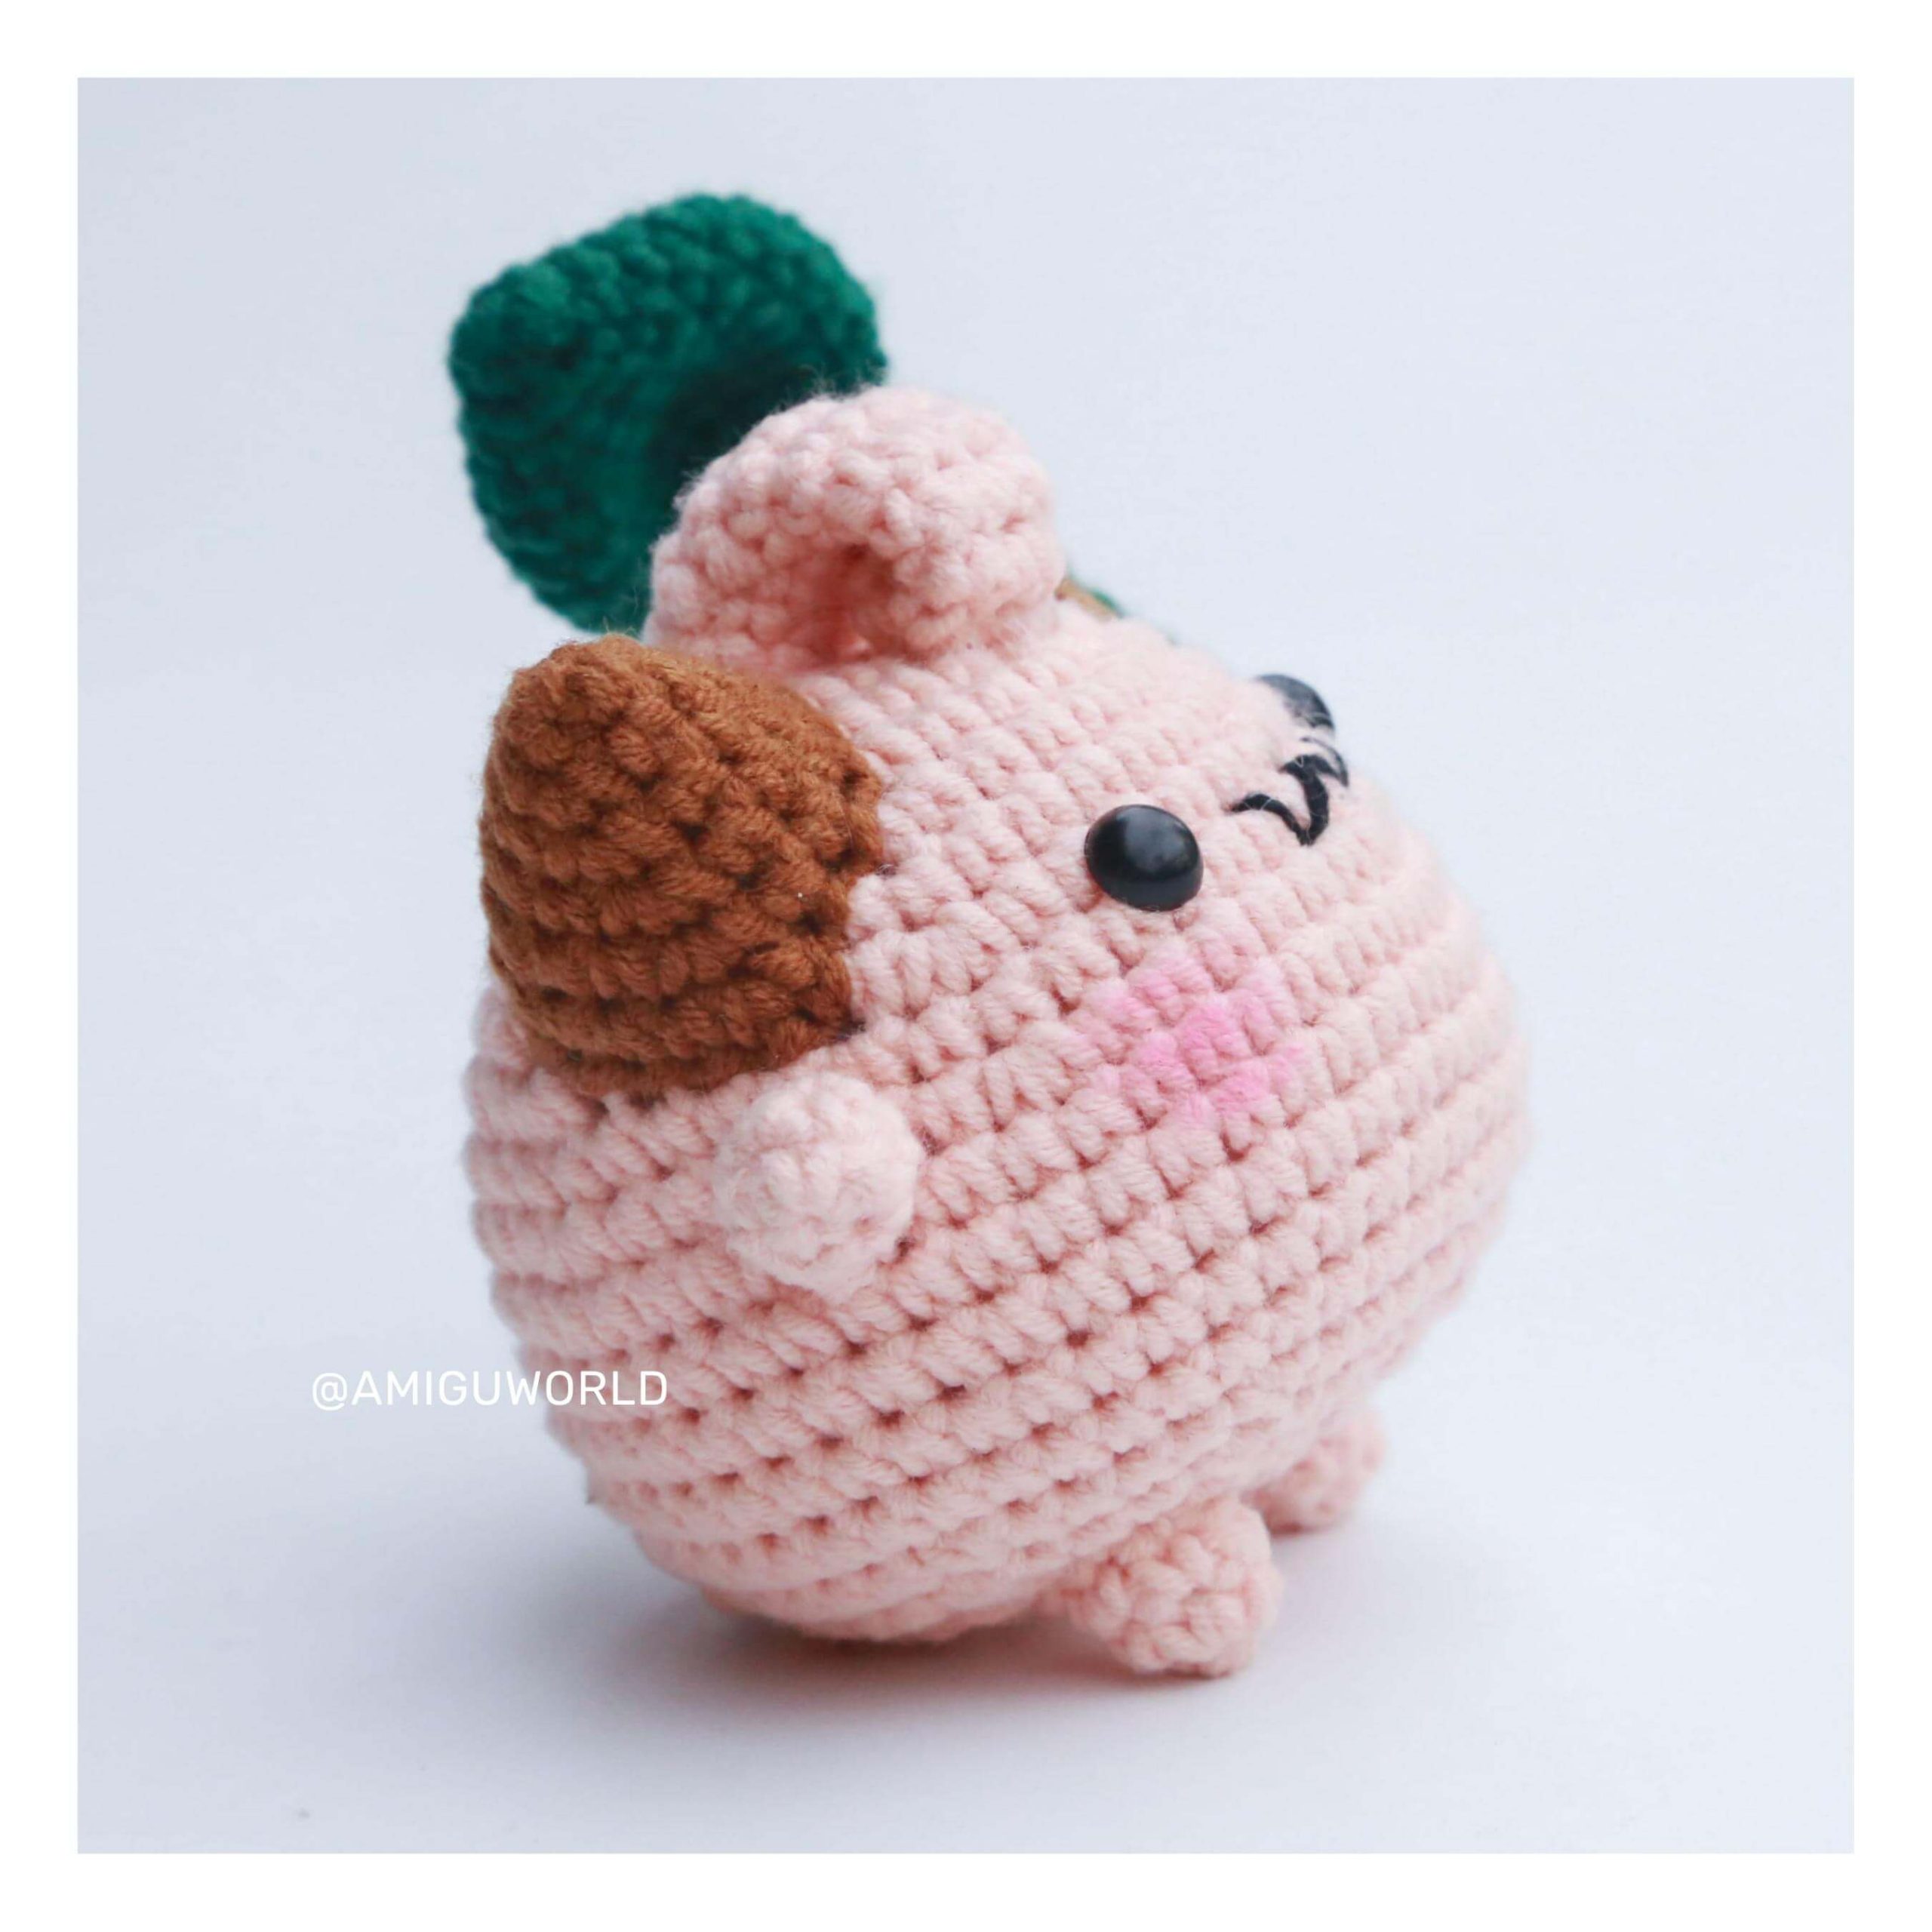 Cleffa-amigurumi-crochet-pattern-by-AmiguWorld (10)